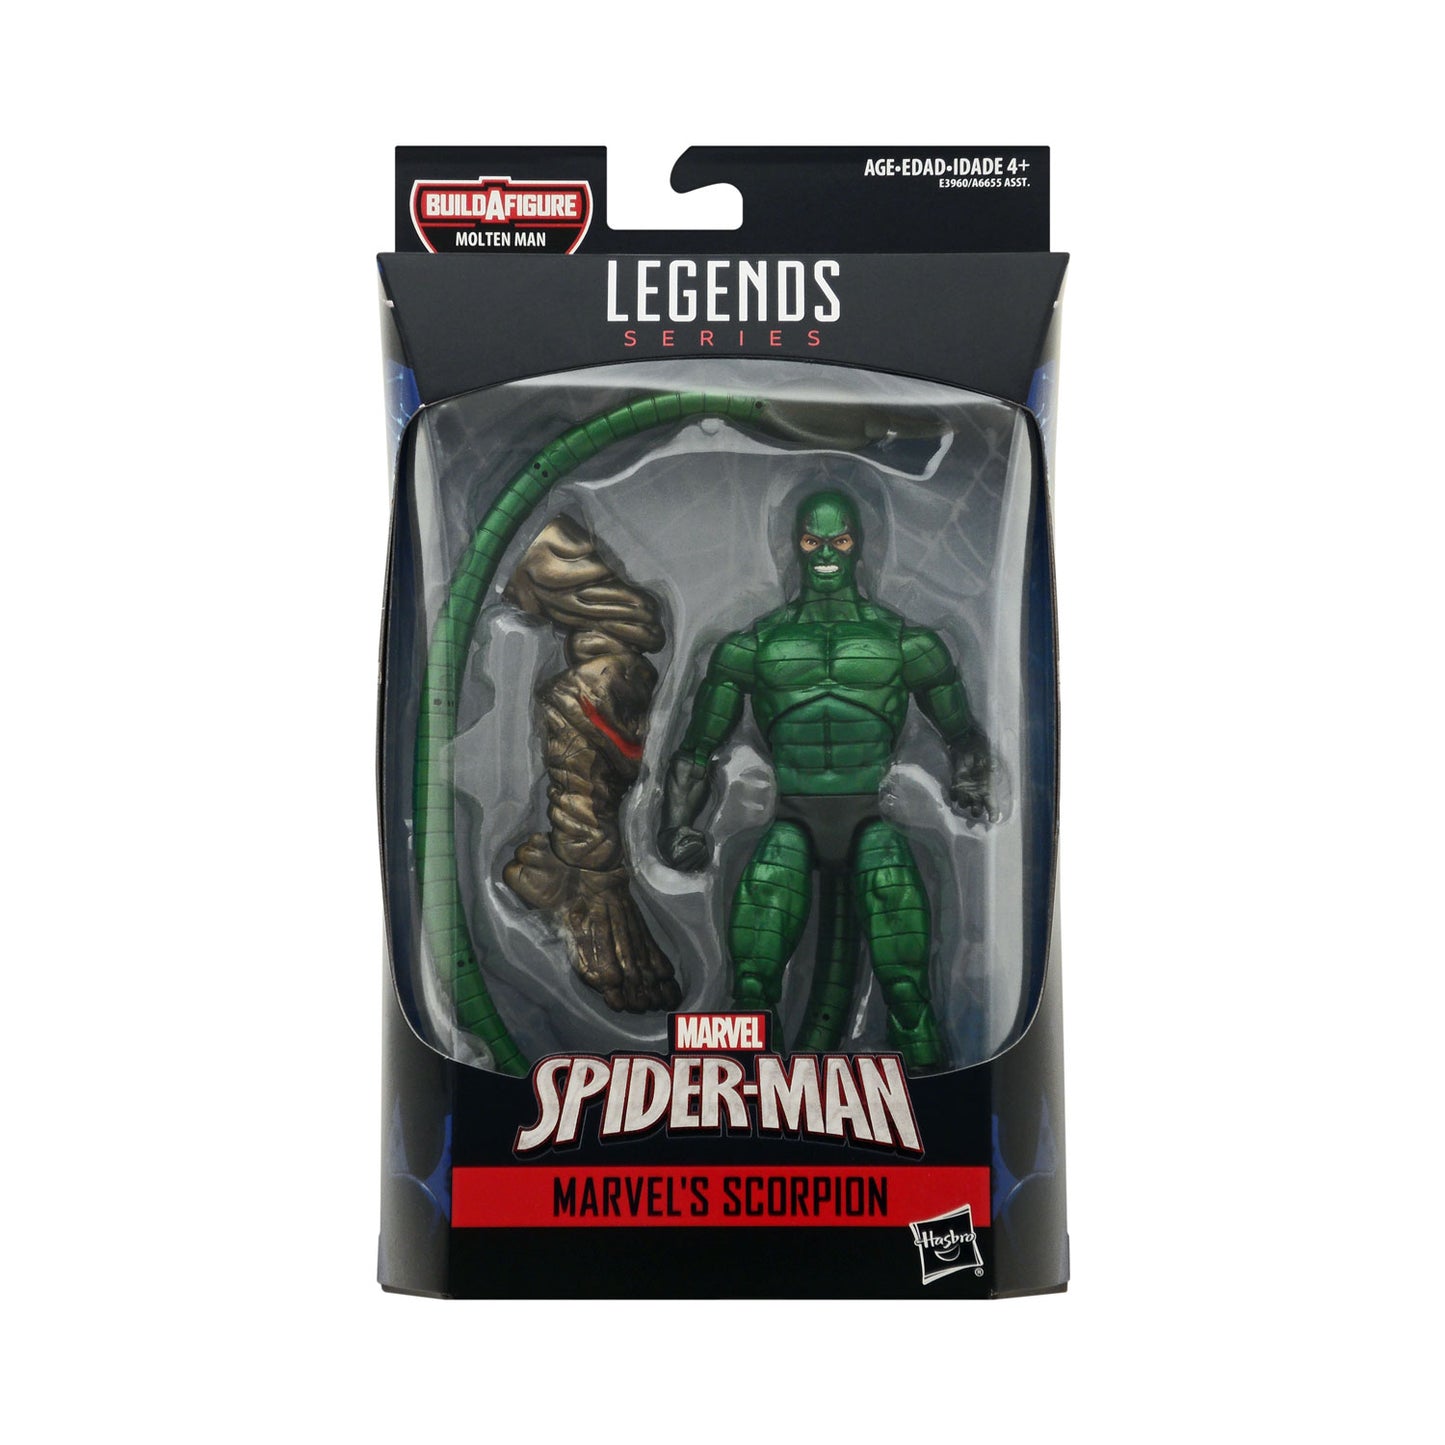 Marvel Legends Molten Man Series Marvel's Scorpion 6-Inch Action Figure